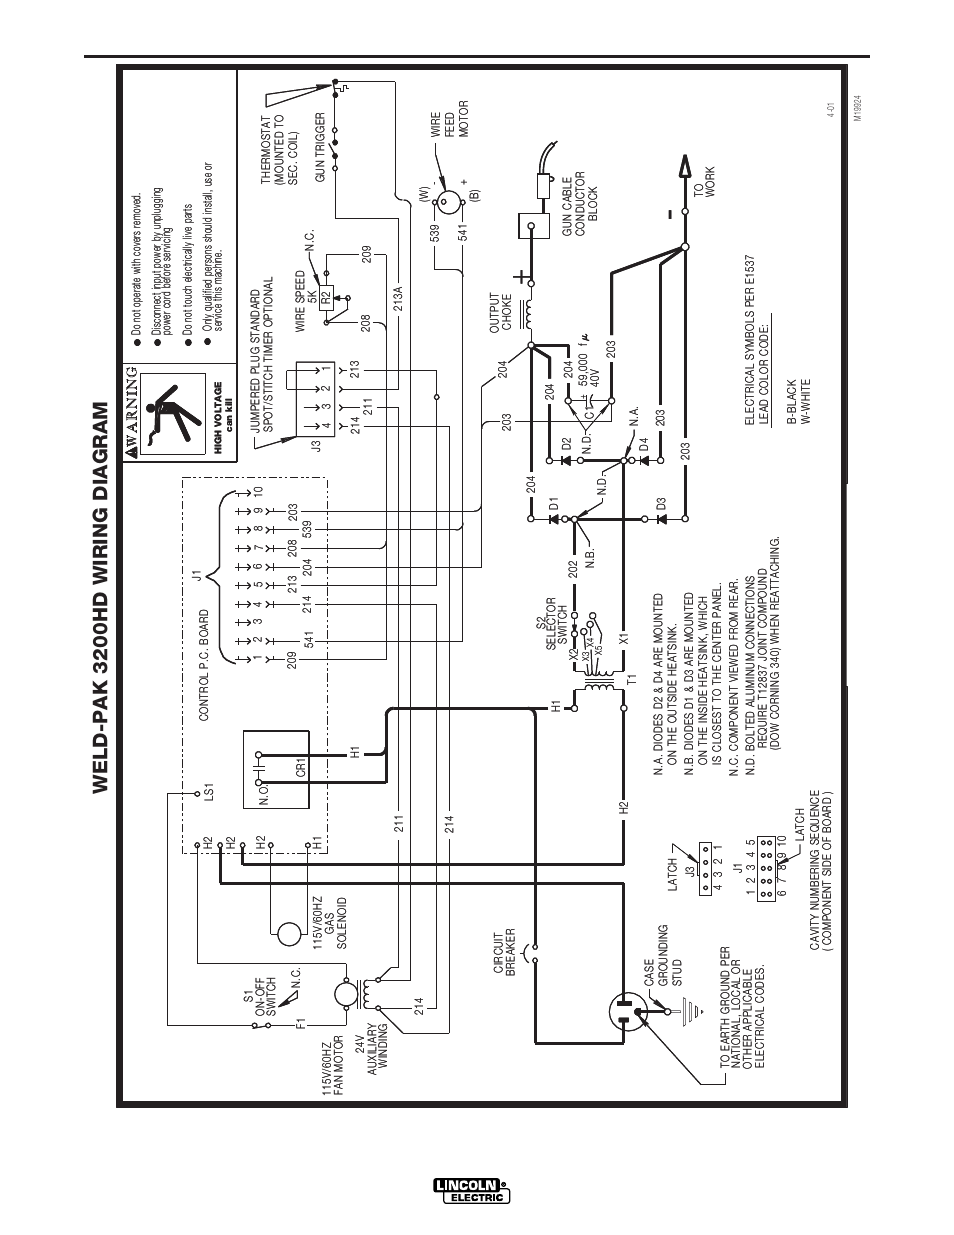 Diagrams, Weld-pak 3200hd, Weld-pak 3200hd wiring diagram | Lincoln